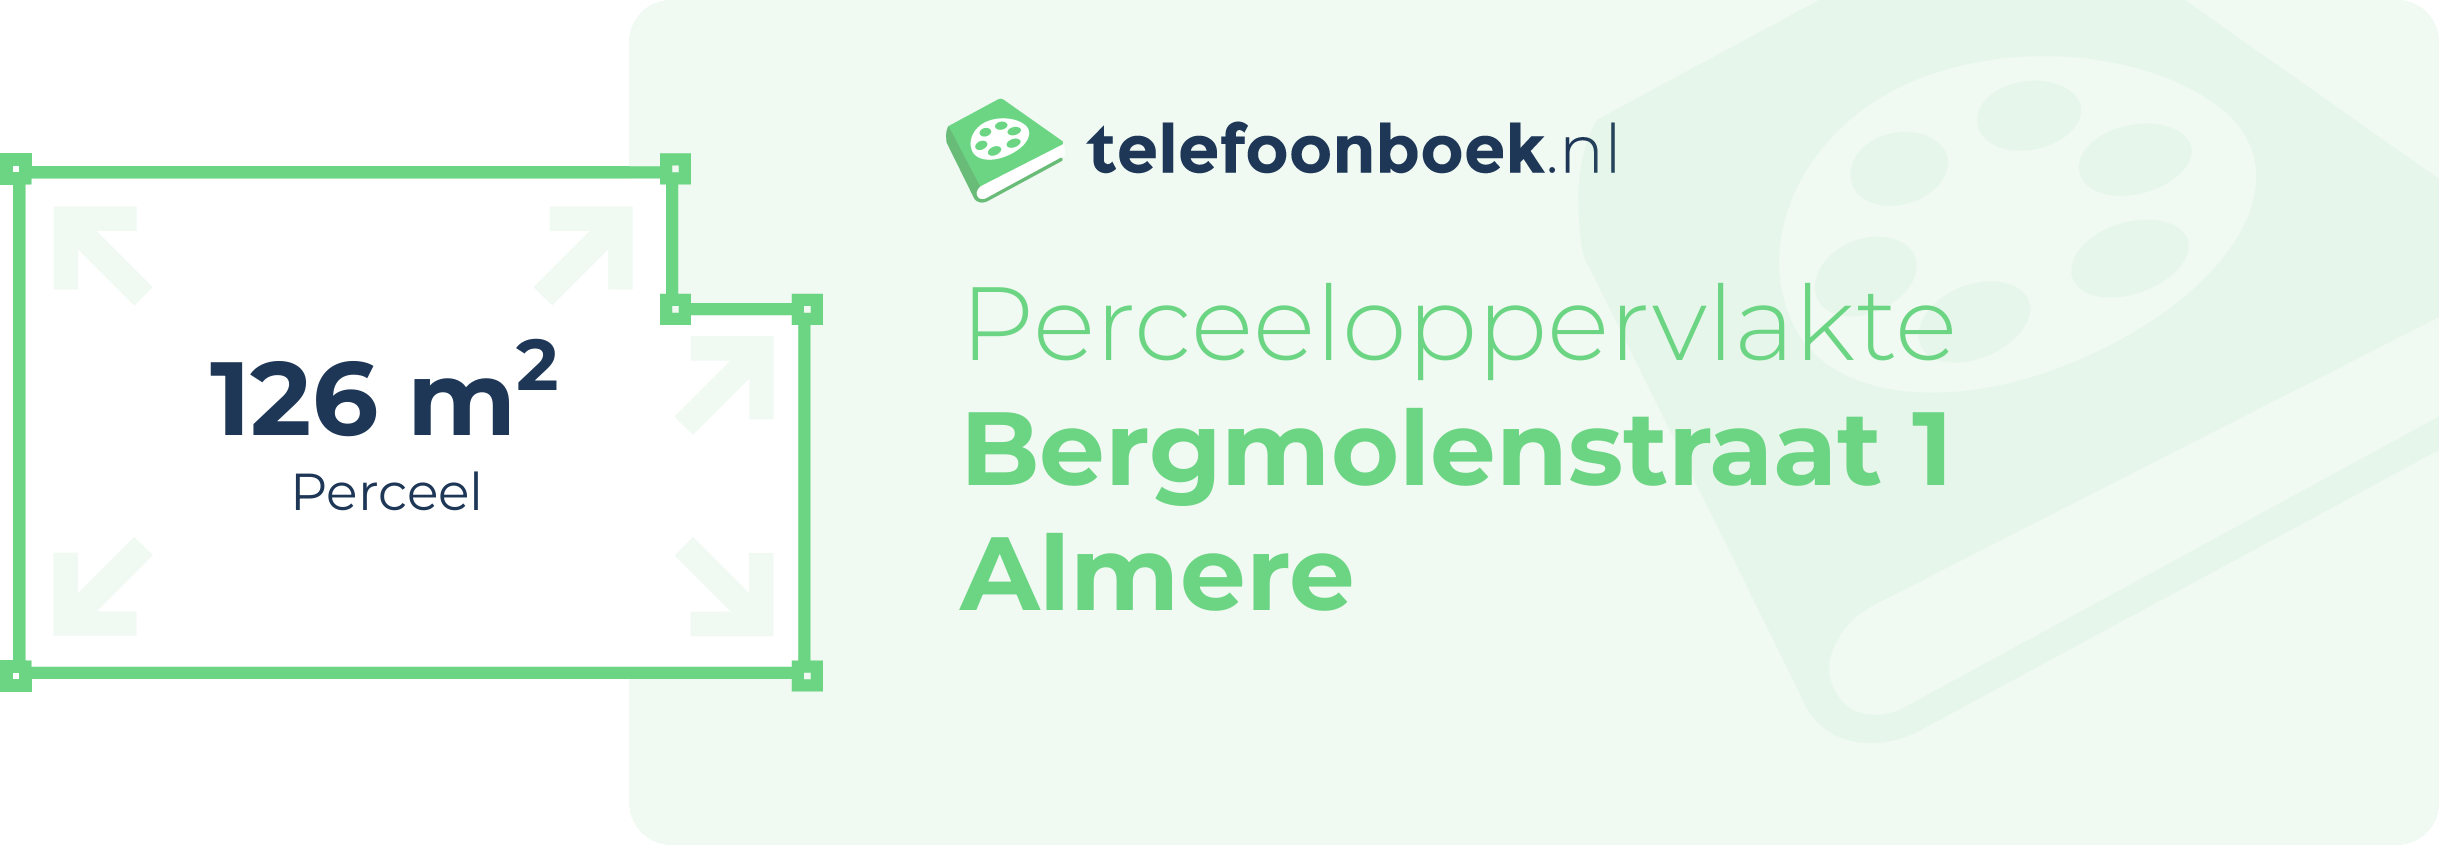 Perceeloppervlakte Bergmolenstraat 1 Almere